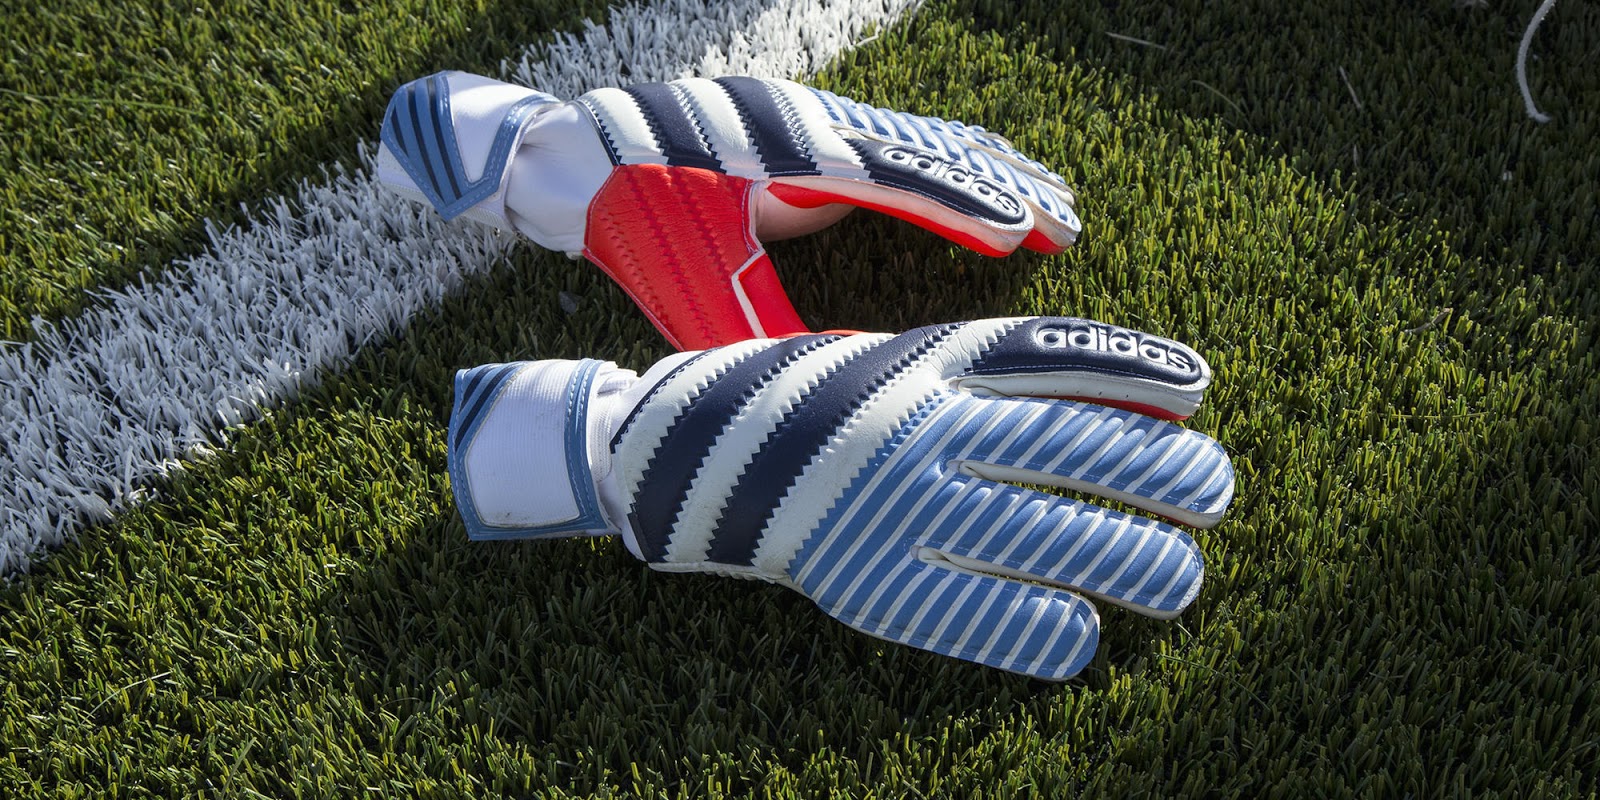 Adidas 'History Pack' Gloves Released - Footy Headlines